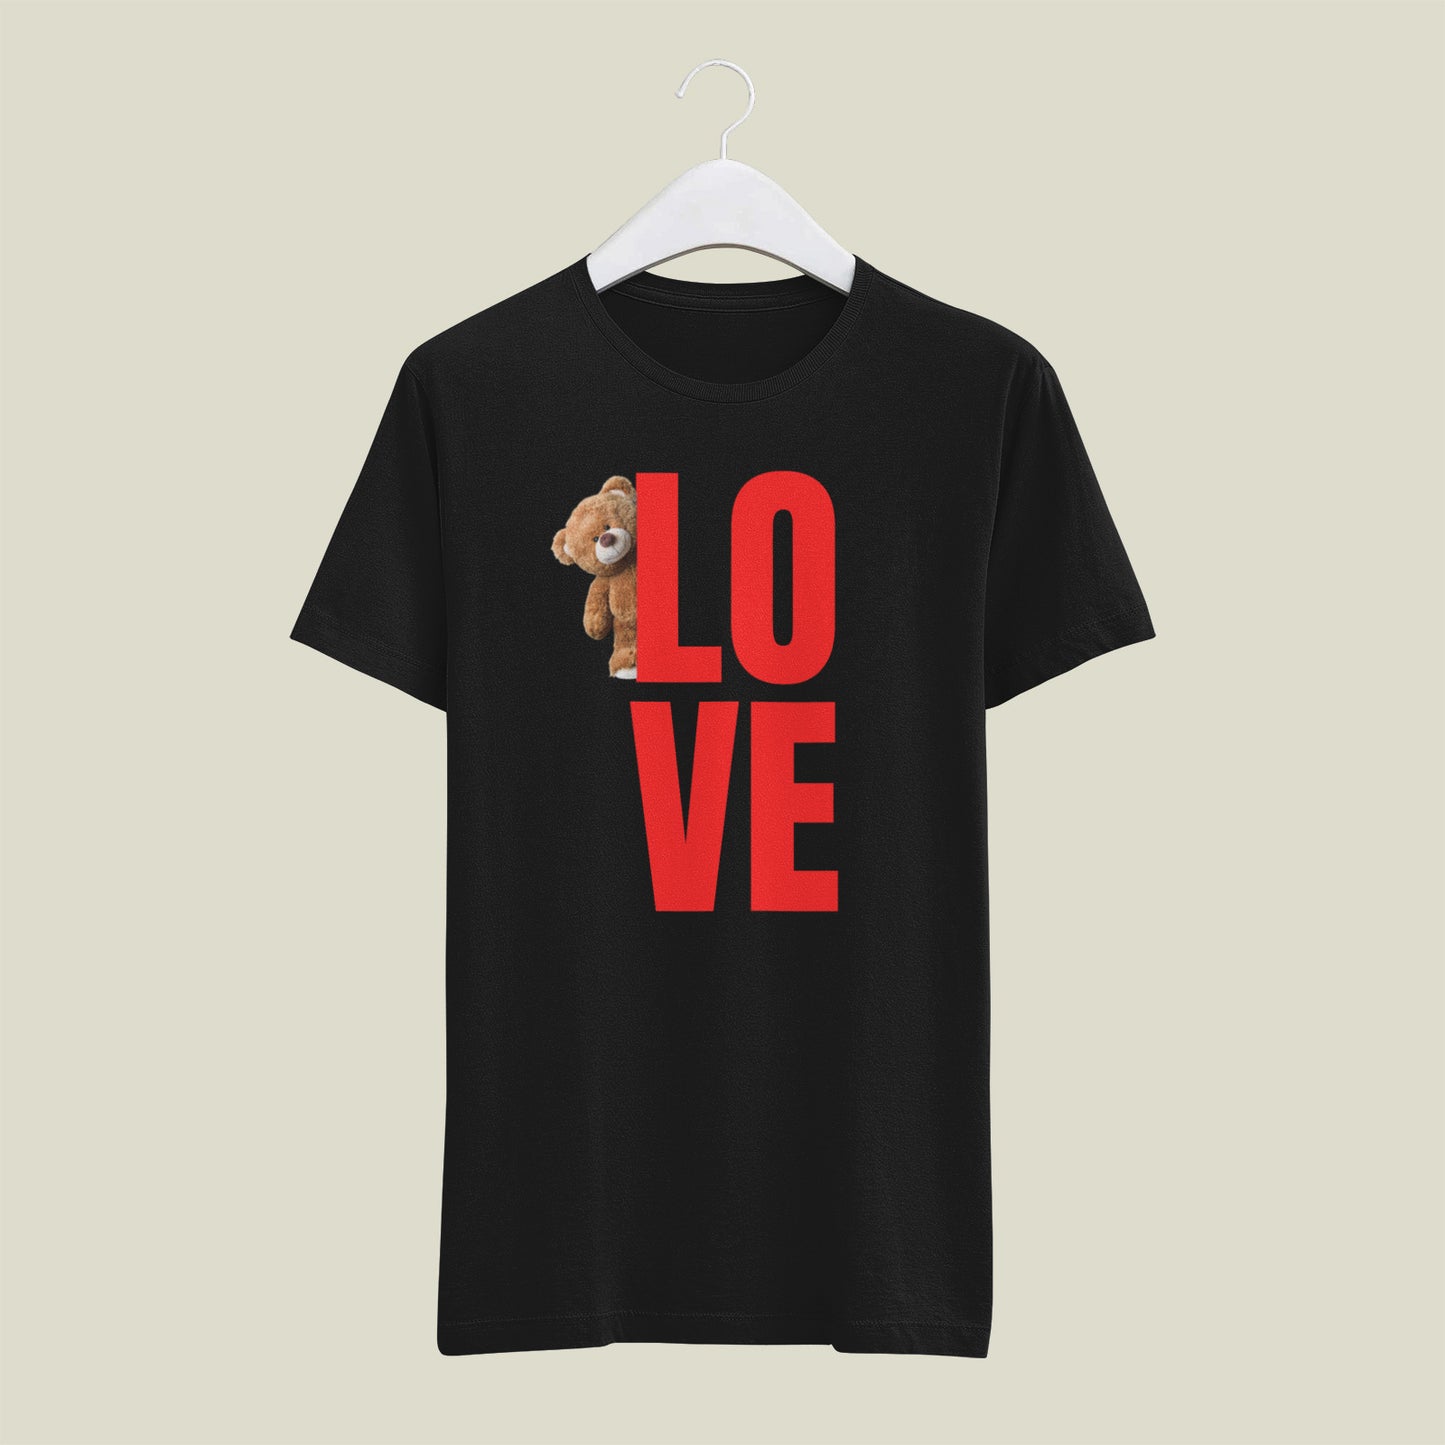 LOVE T shirt